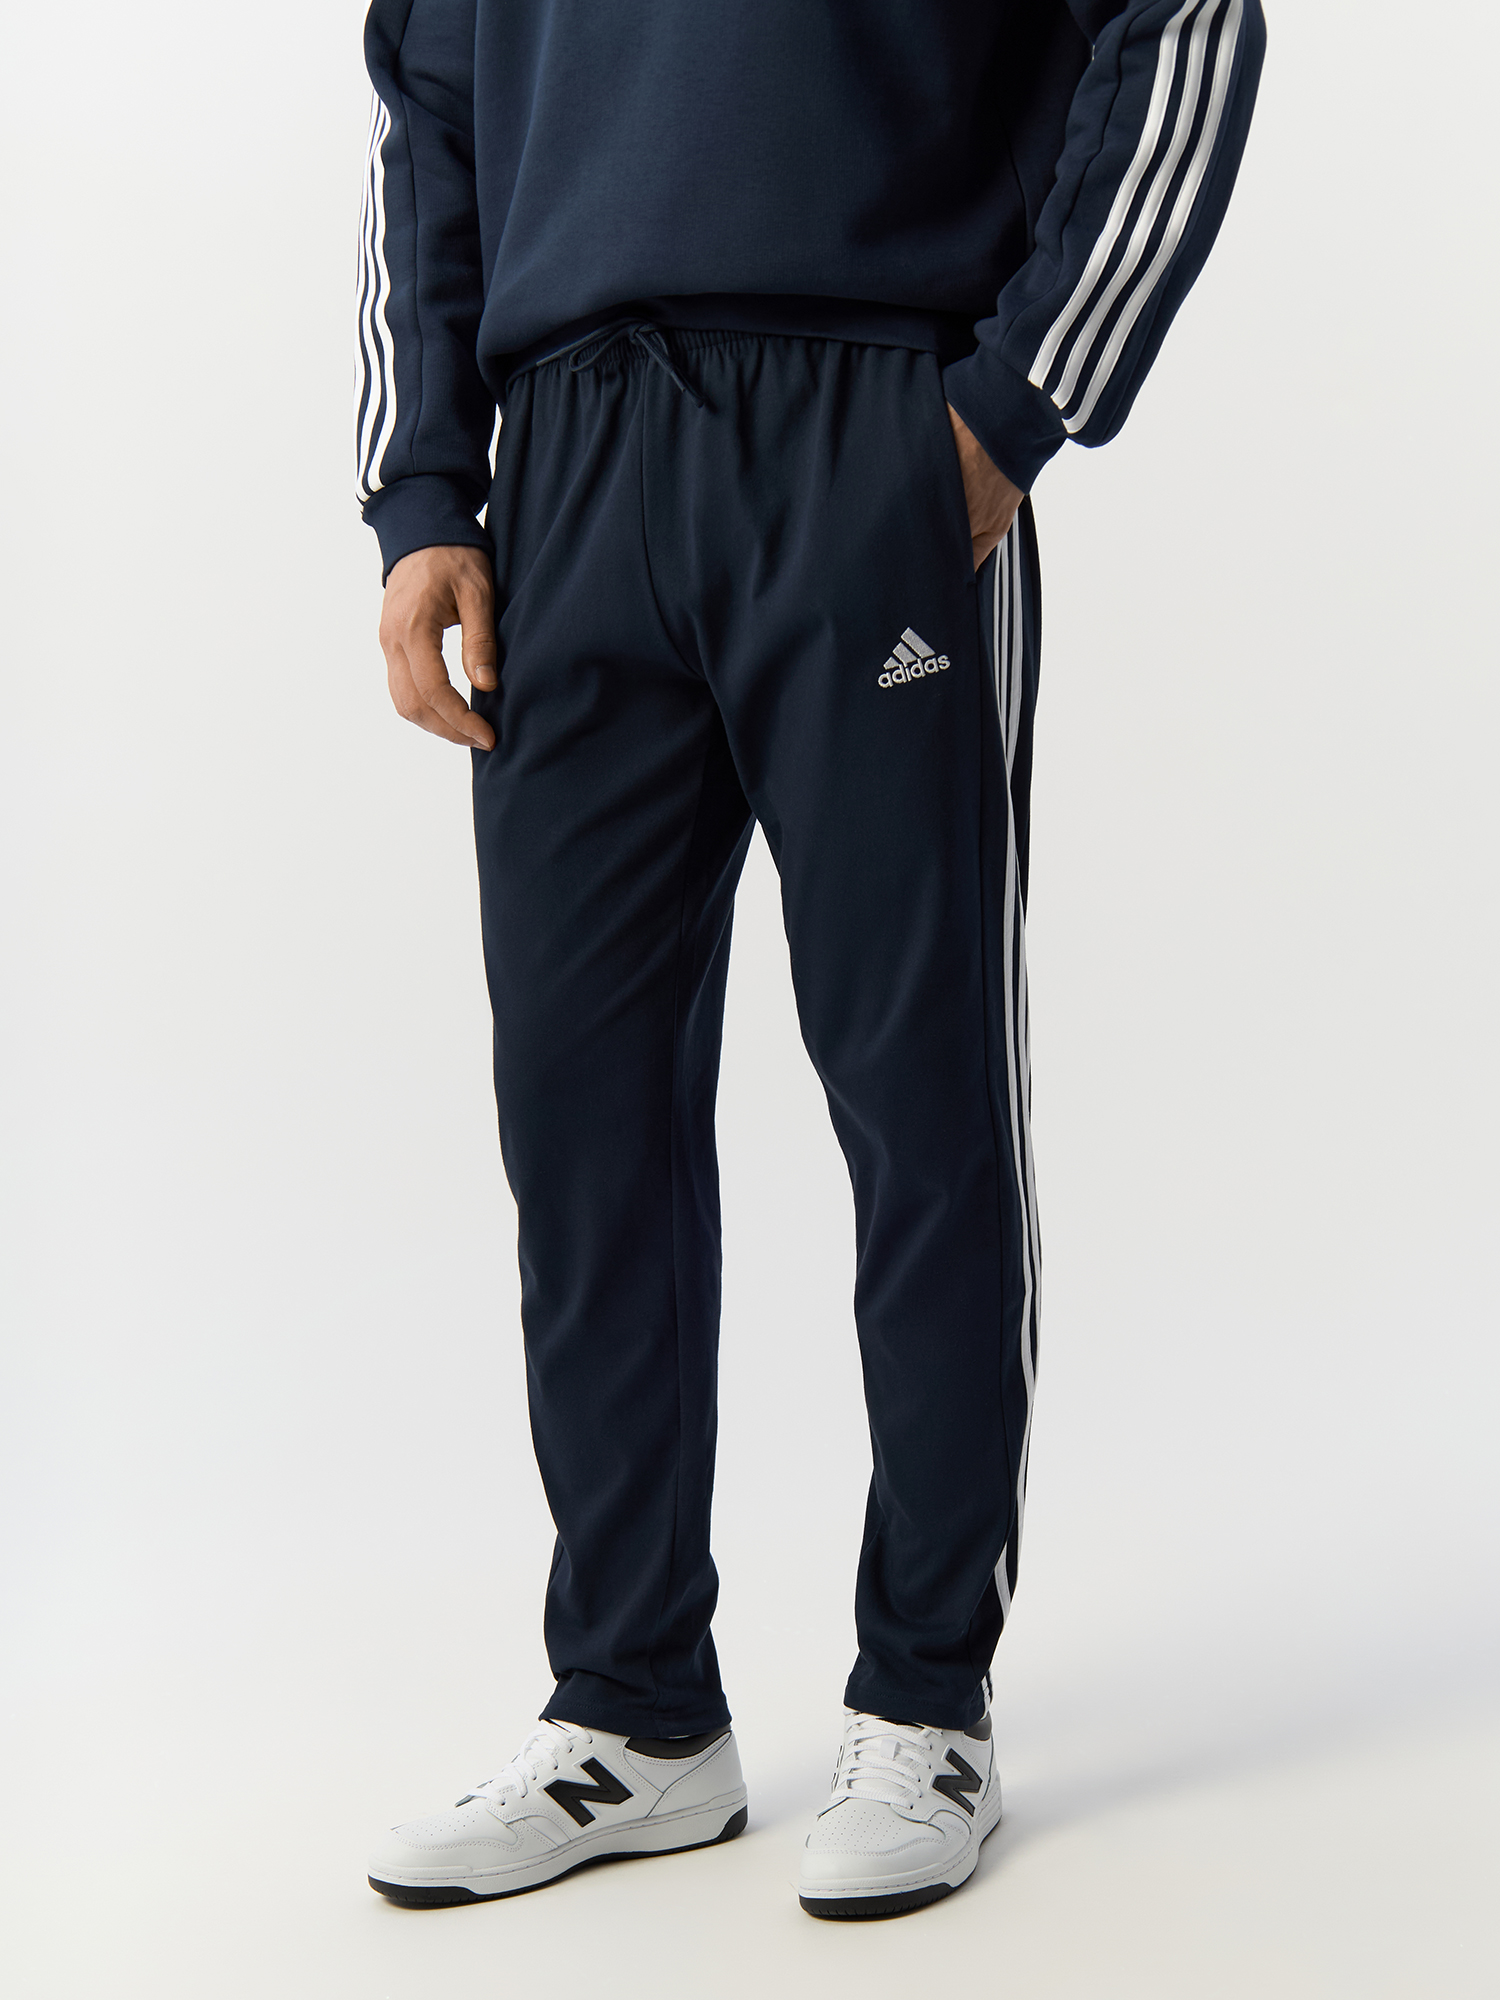 Брюки Adidas для мужчин, спортивные, IC0045, размер XL, чёрно-белые-AA35